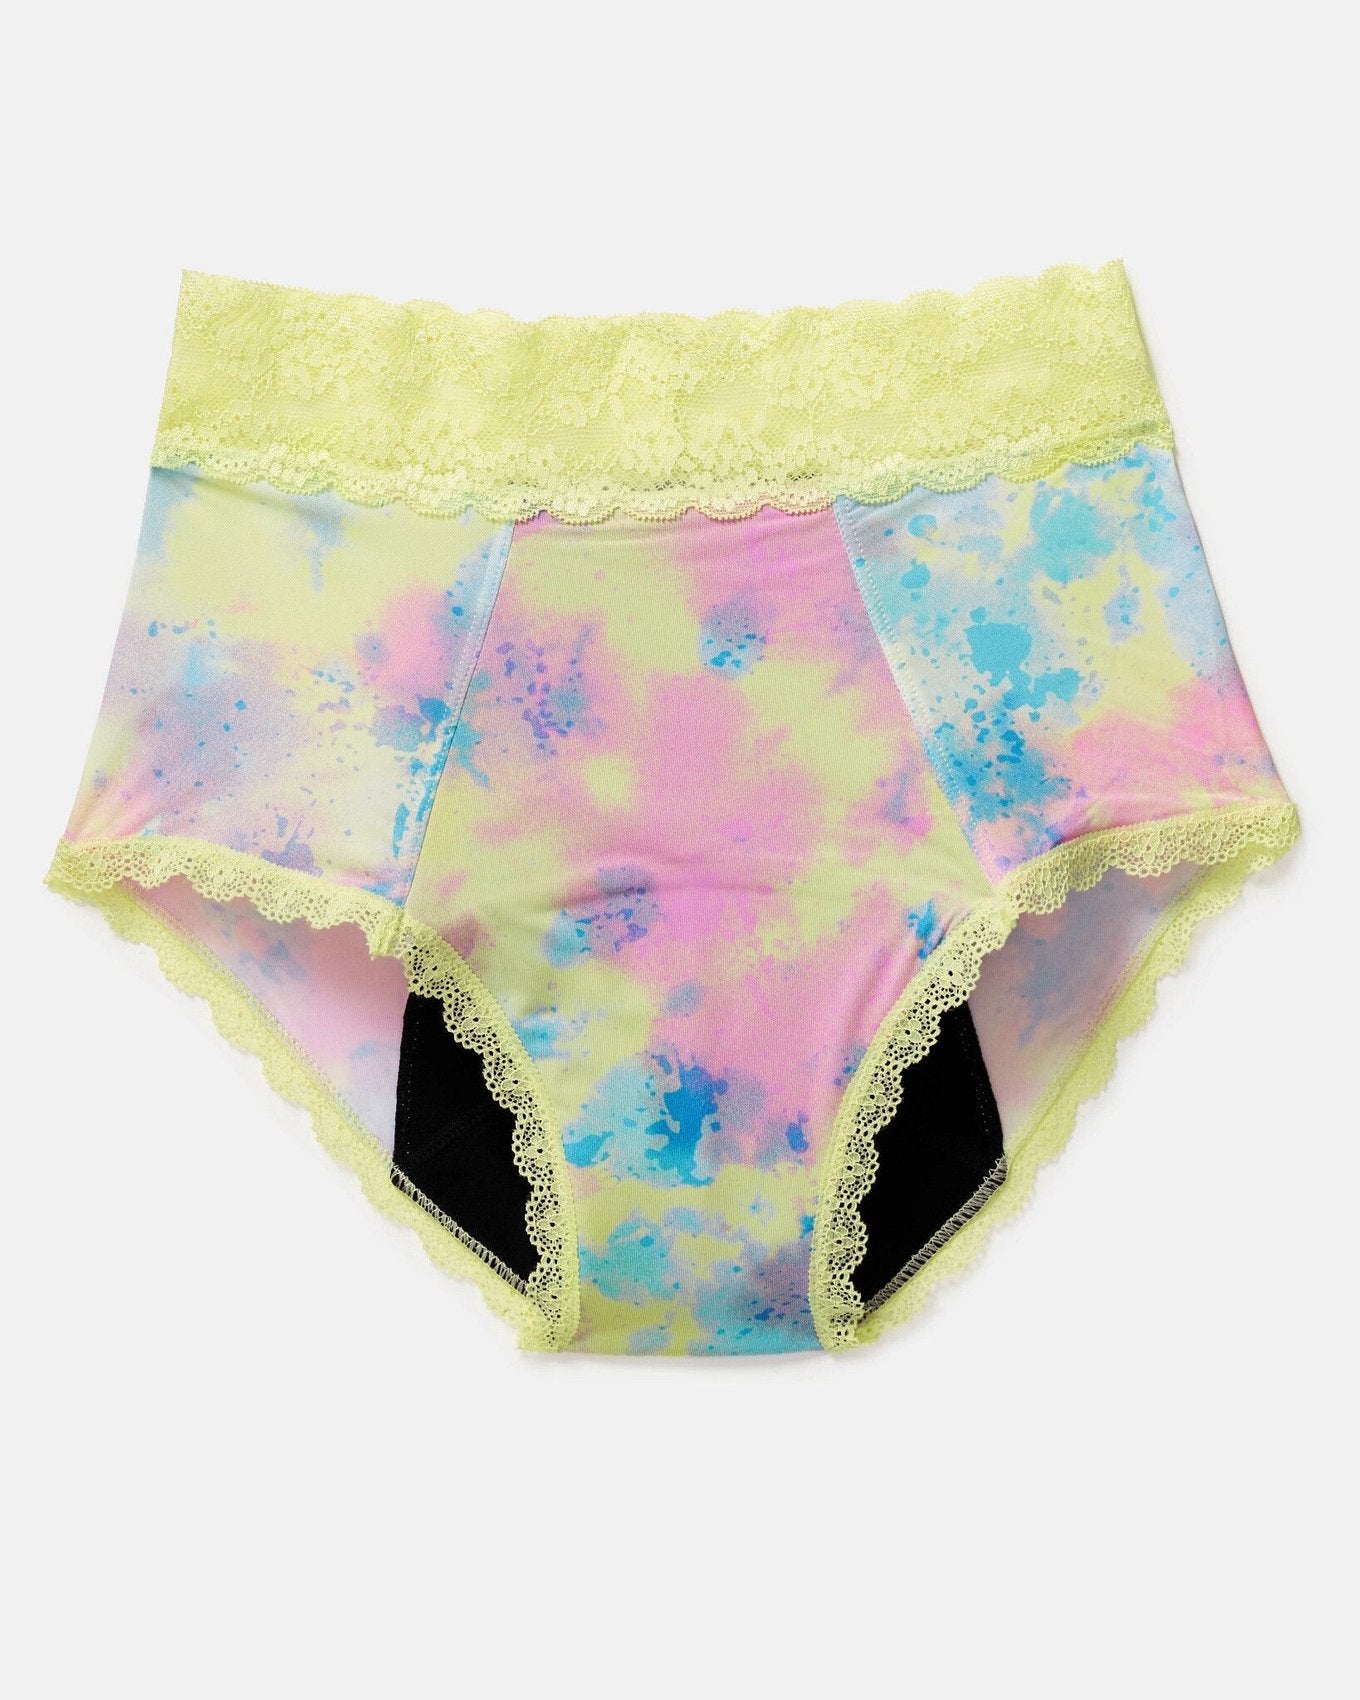 Amelia period-proof panty – Joyja